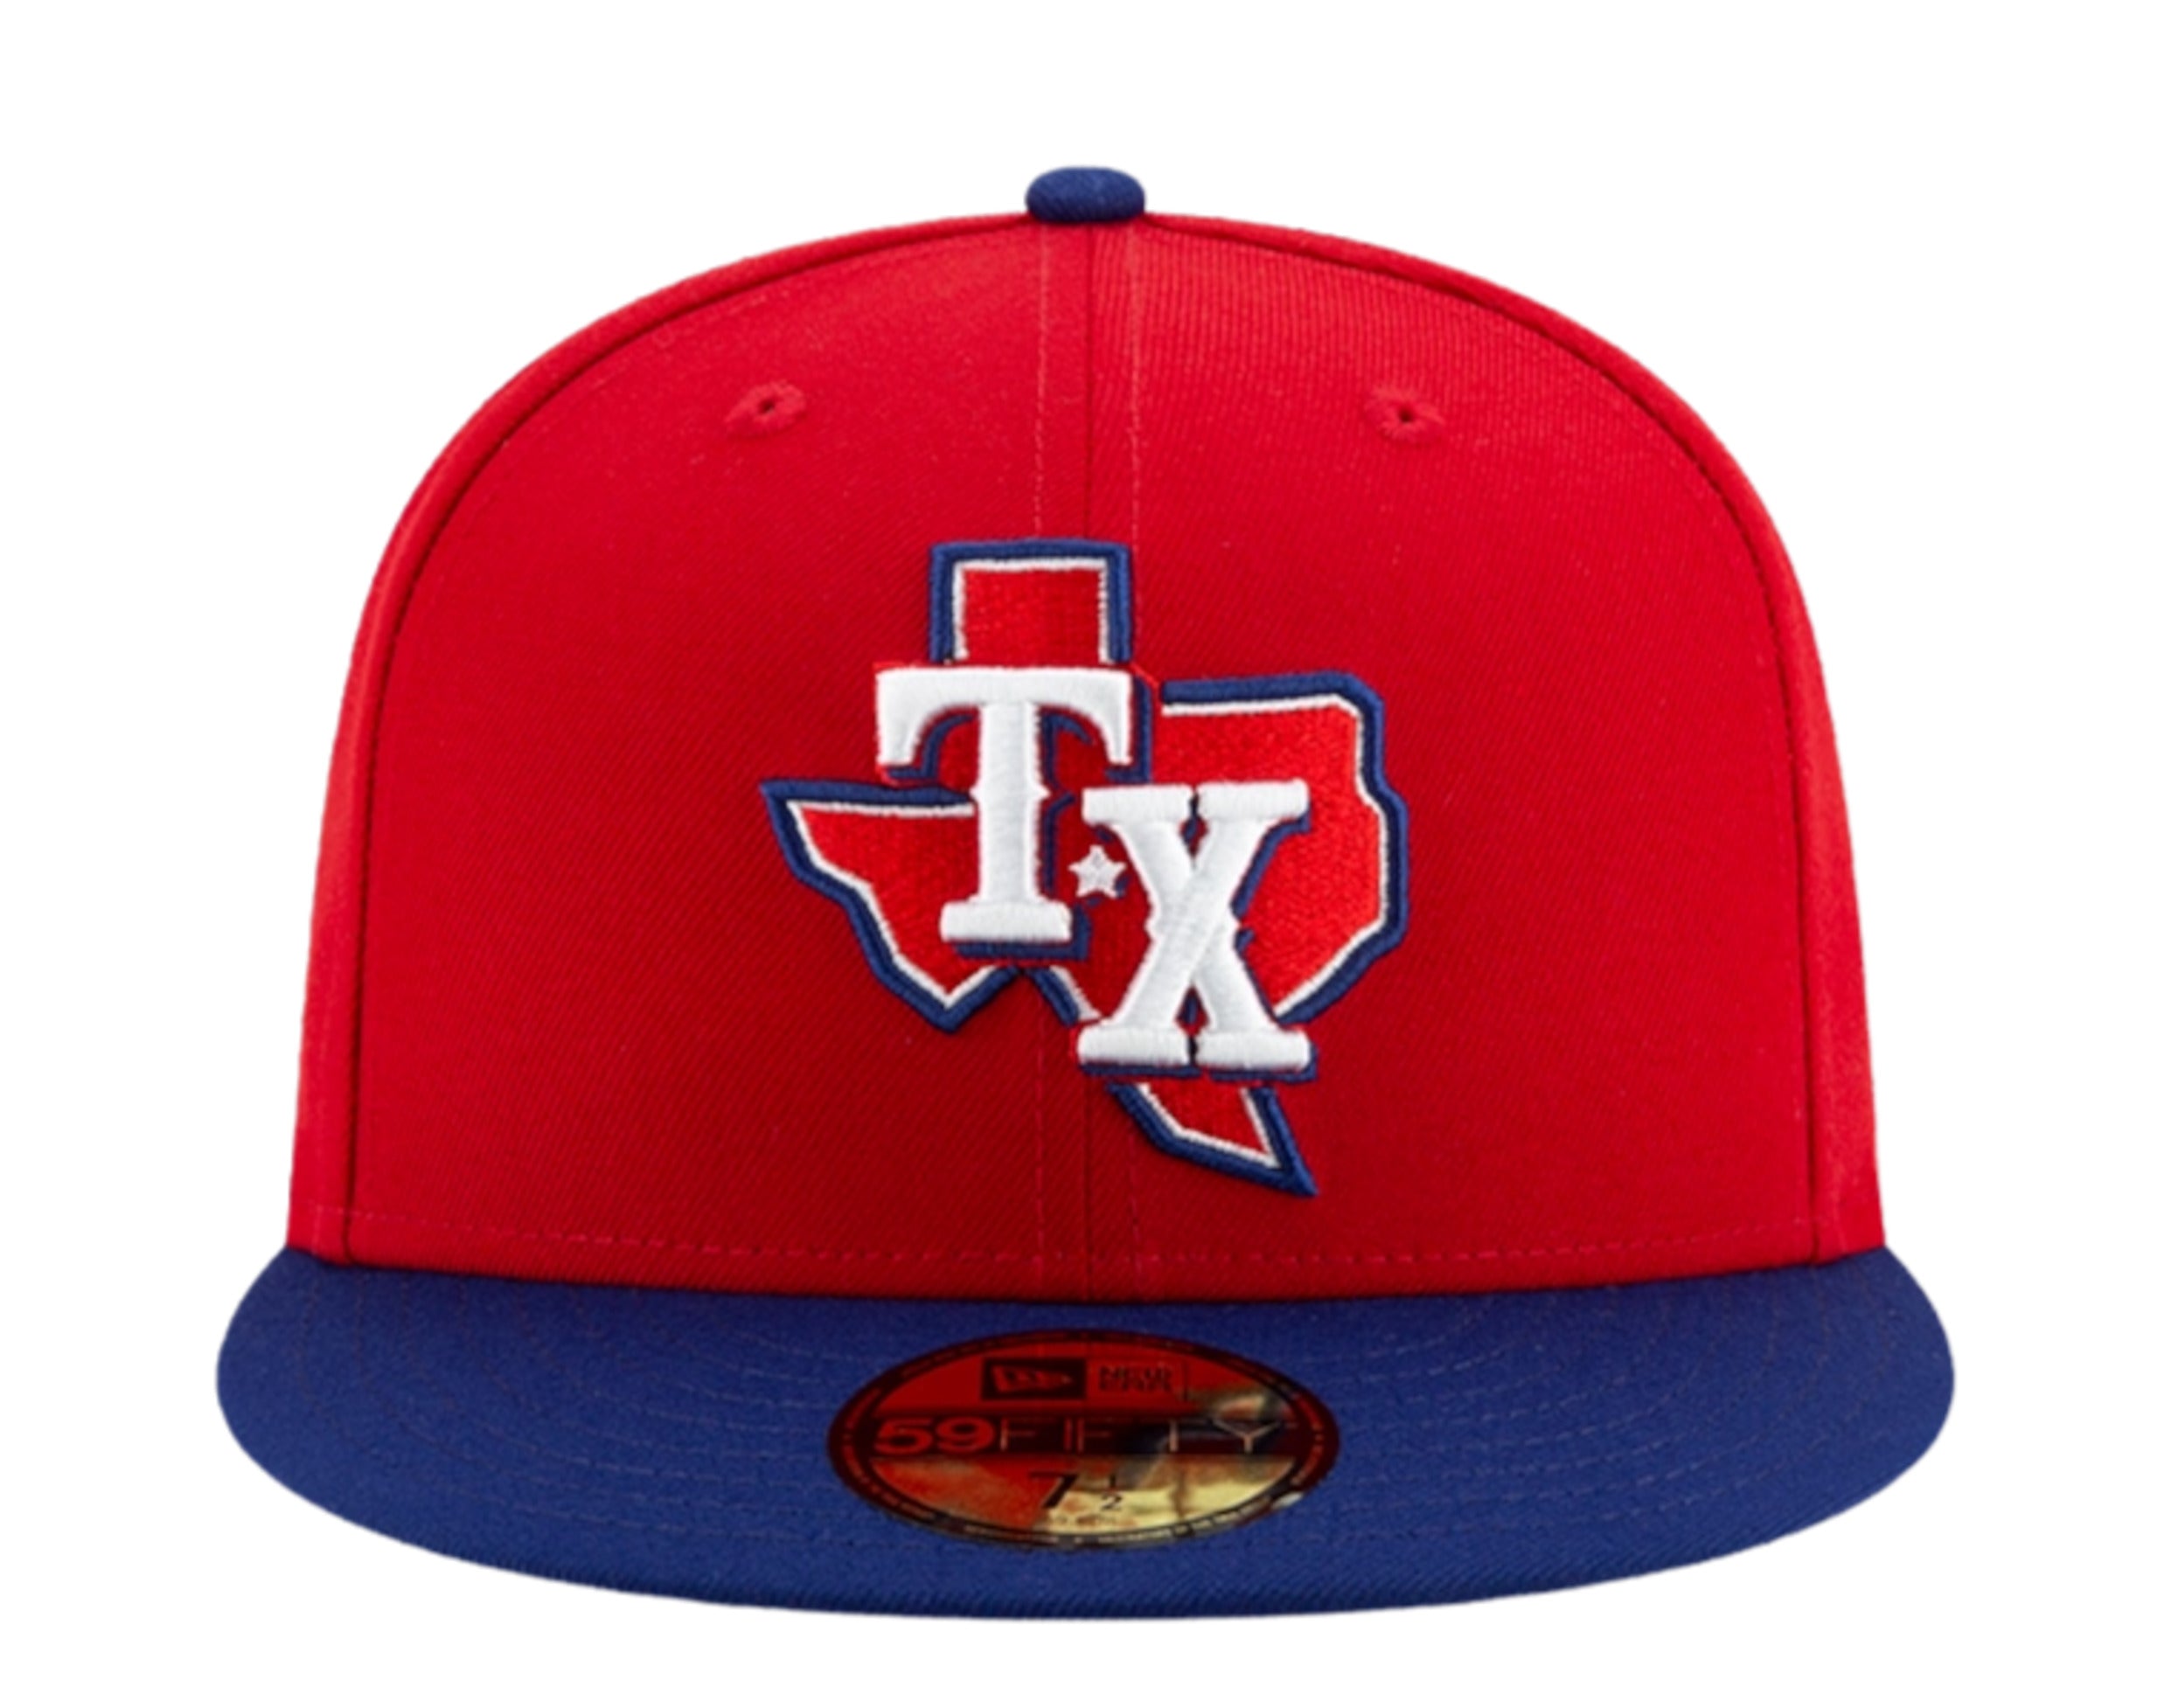 MLB - Texas Rangers All-Star Mat 33.75x42.5 